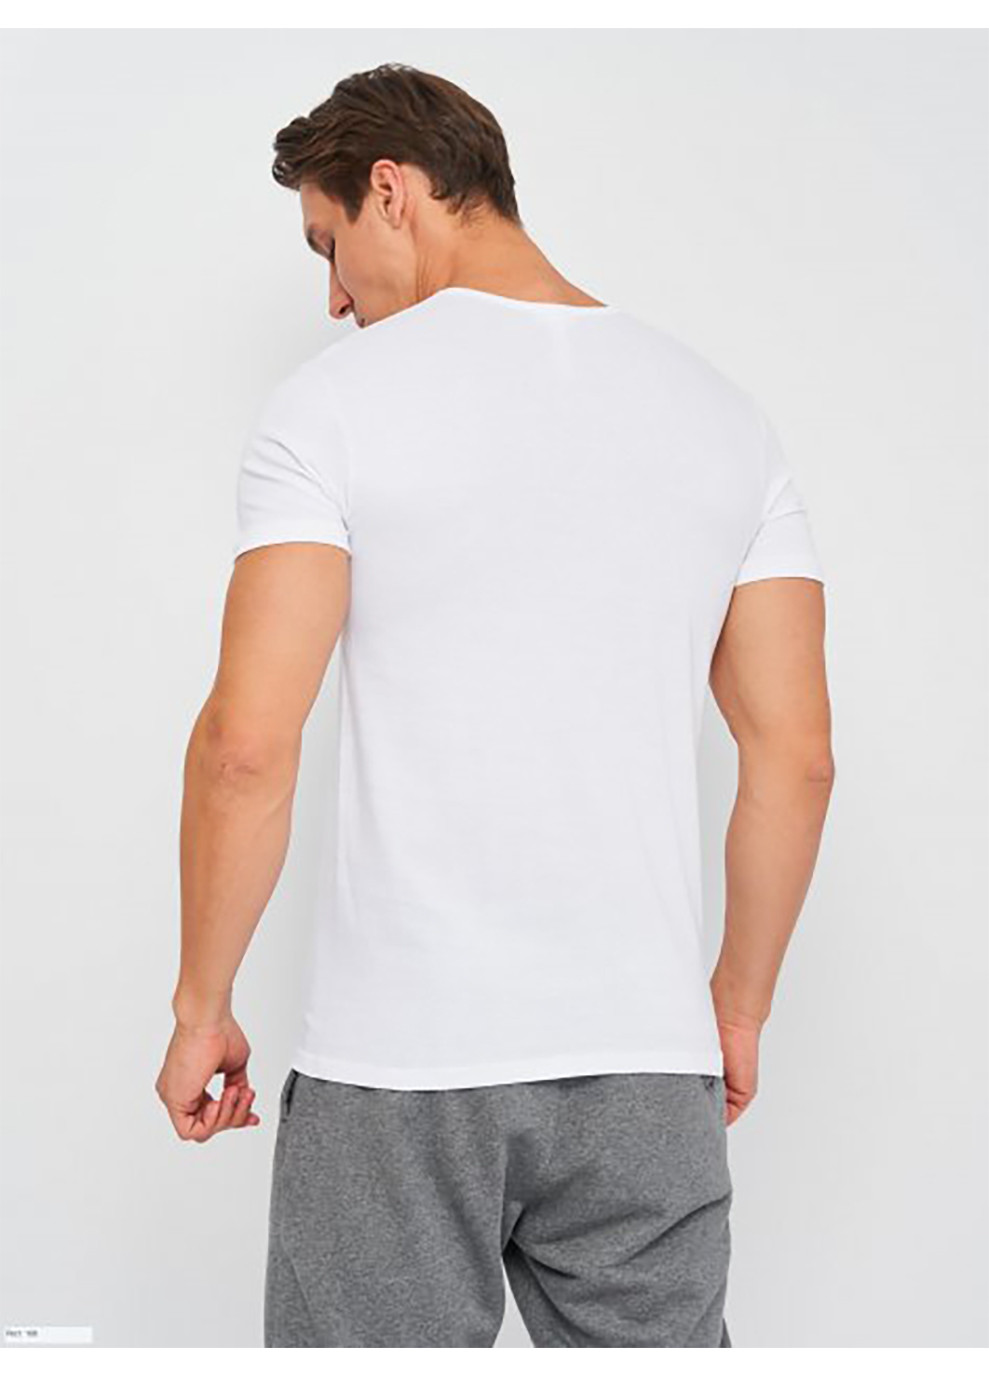 Біла футболка t-shirt mezza manica scollo v білий чол xl k1315 bianco xl Kappa